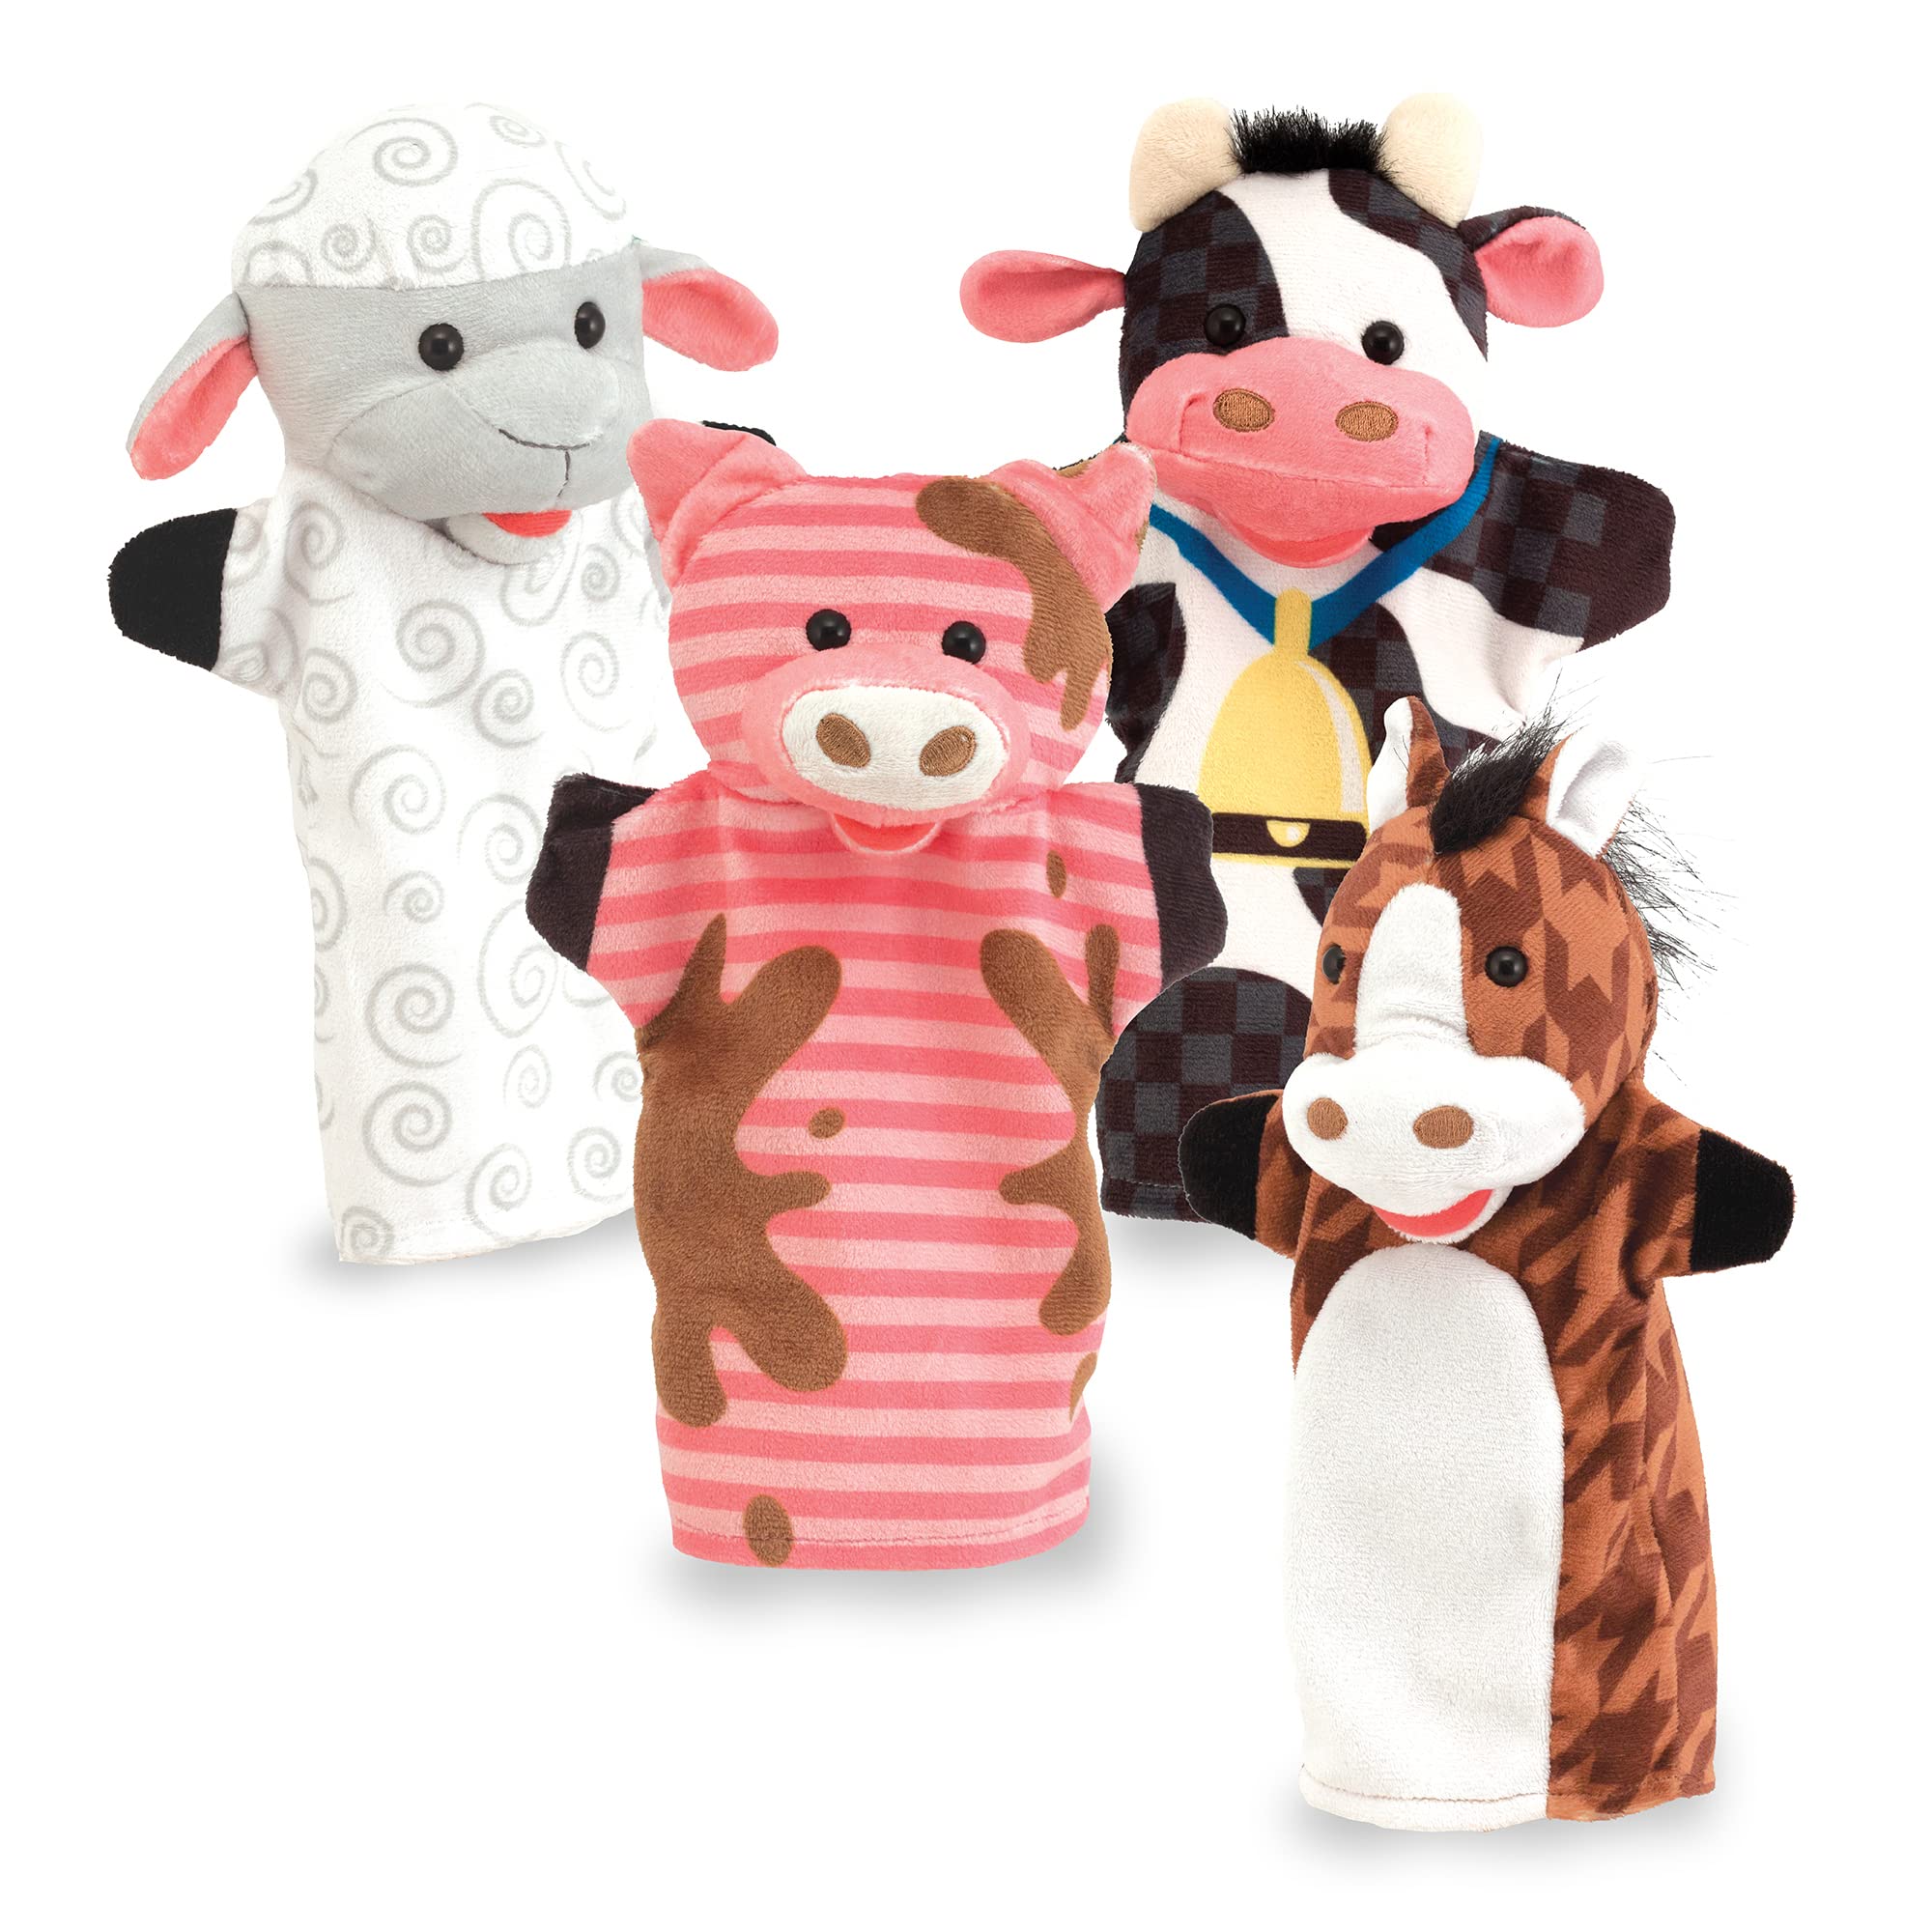 Melissa & Doug Farm Friends Hand Puppets (Set of 4) - Cow, Horse, Sheep, and Pig, Farm, 1 EA